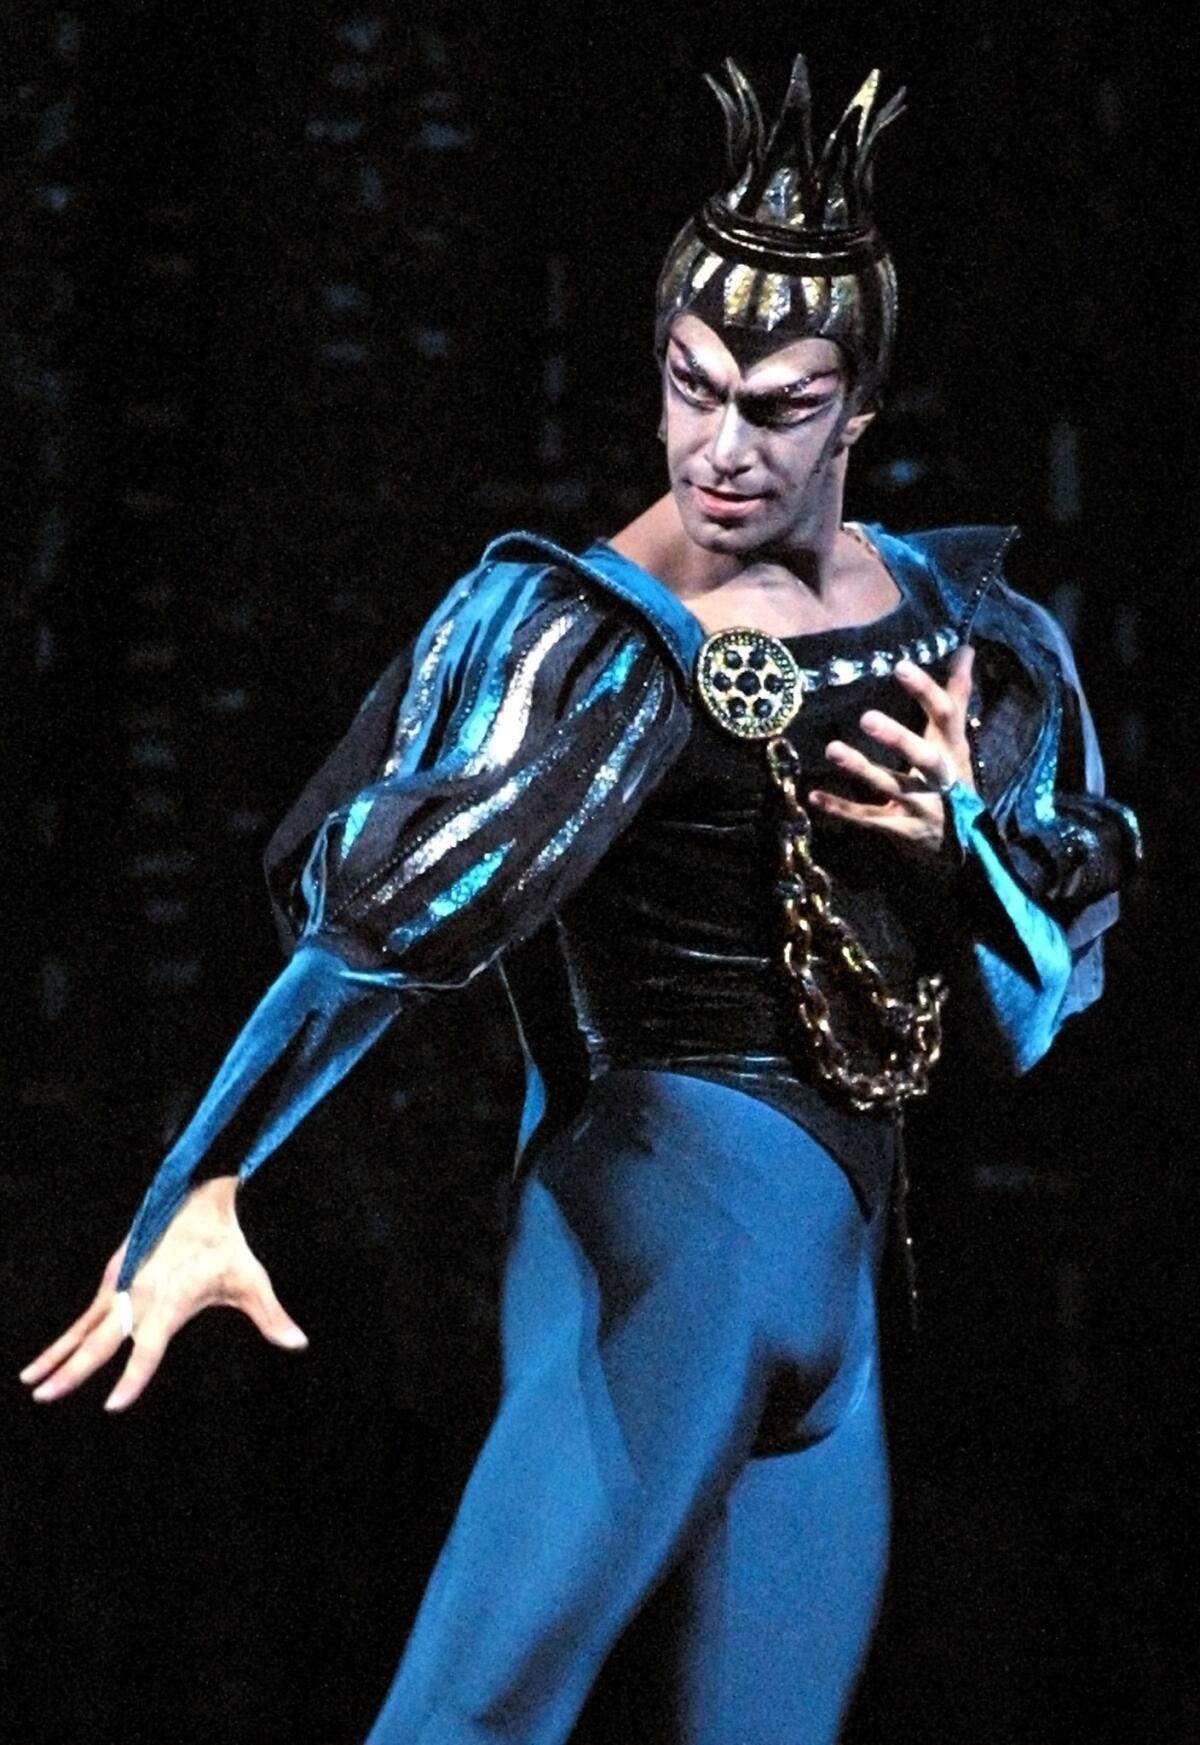 Nikolai Tsiskaridze performs in "Swan Lake" in the Bolshoi Theatre in Moscow.